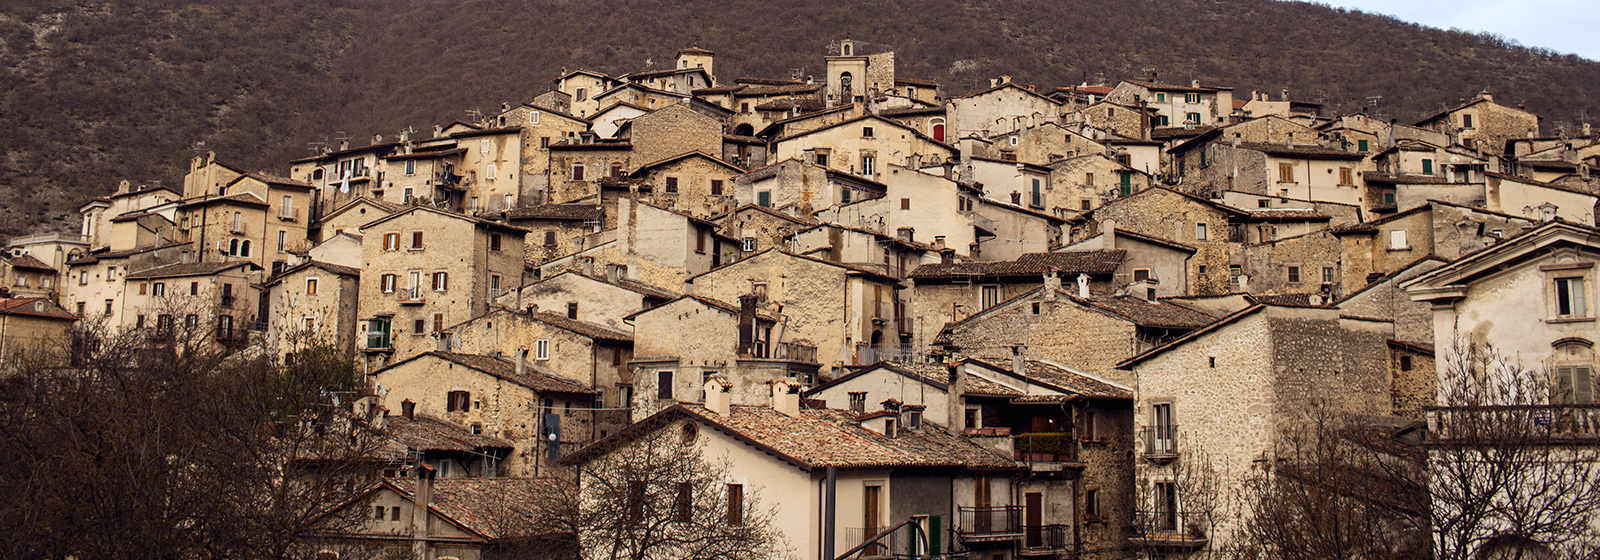 scanno-town-abruzzo-italy.jpg